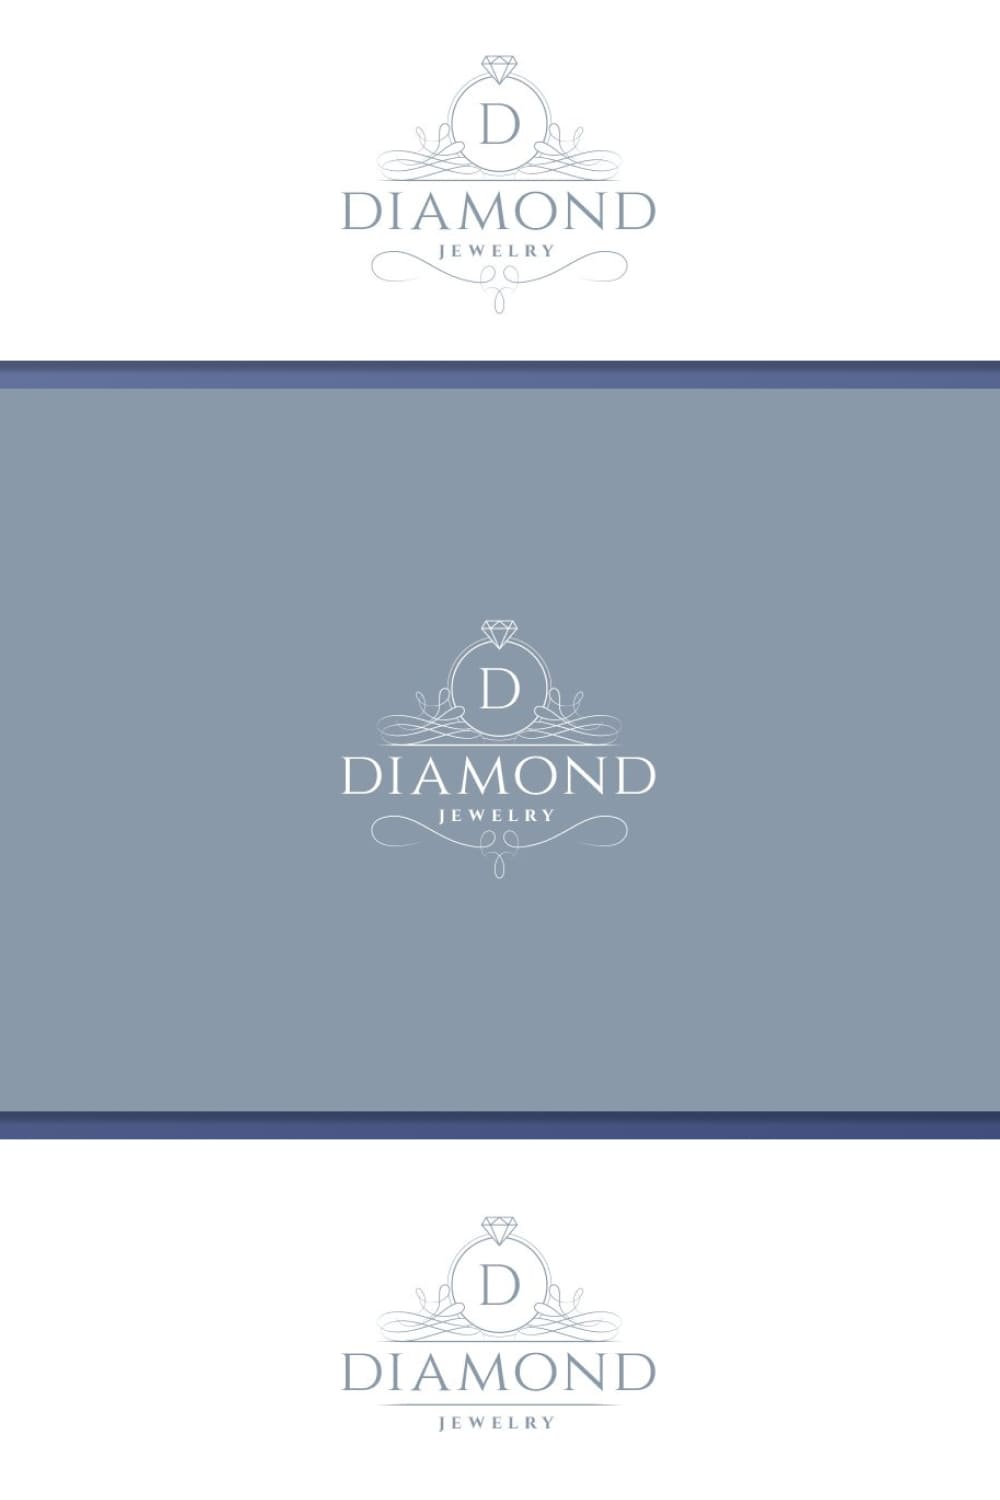 diamond jewelry logo template.